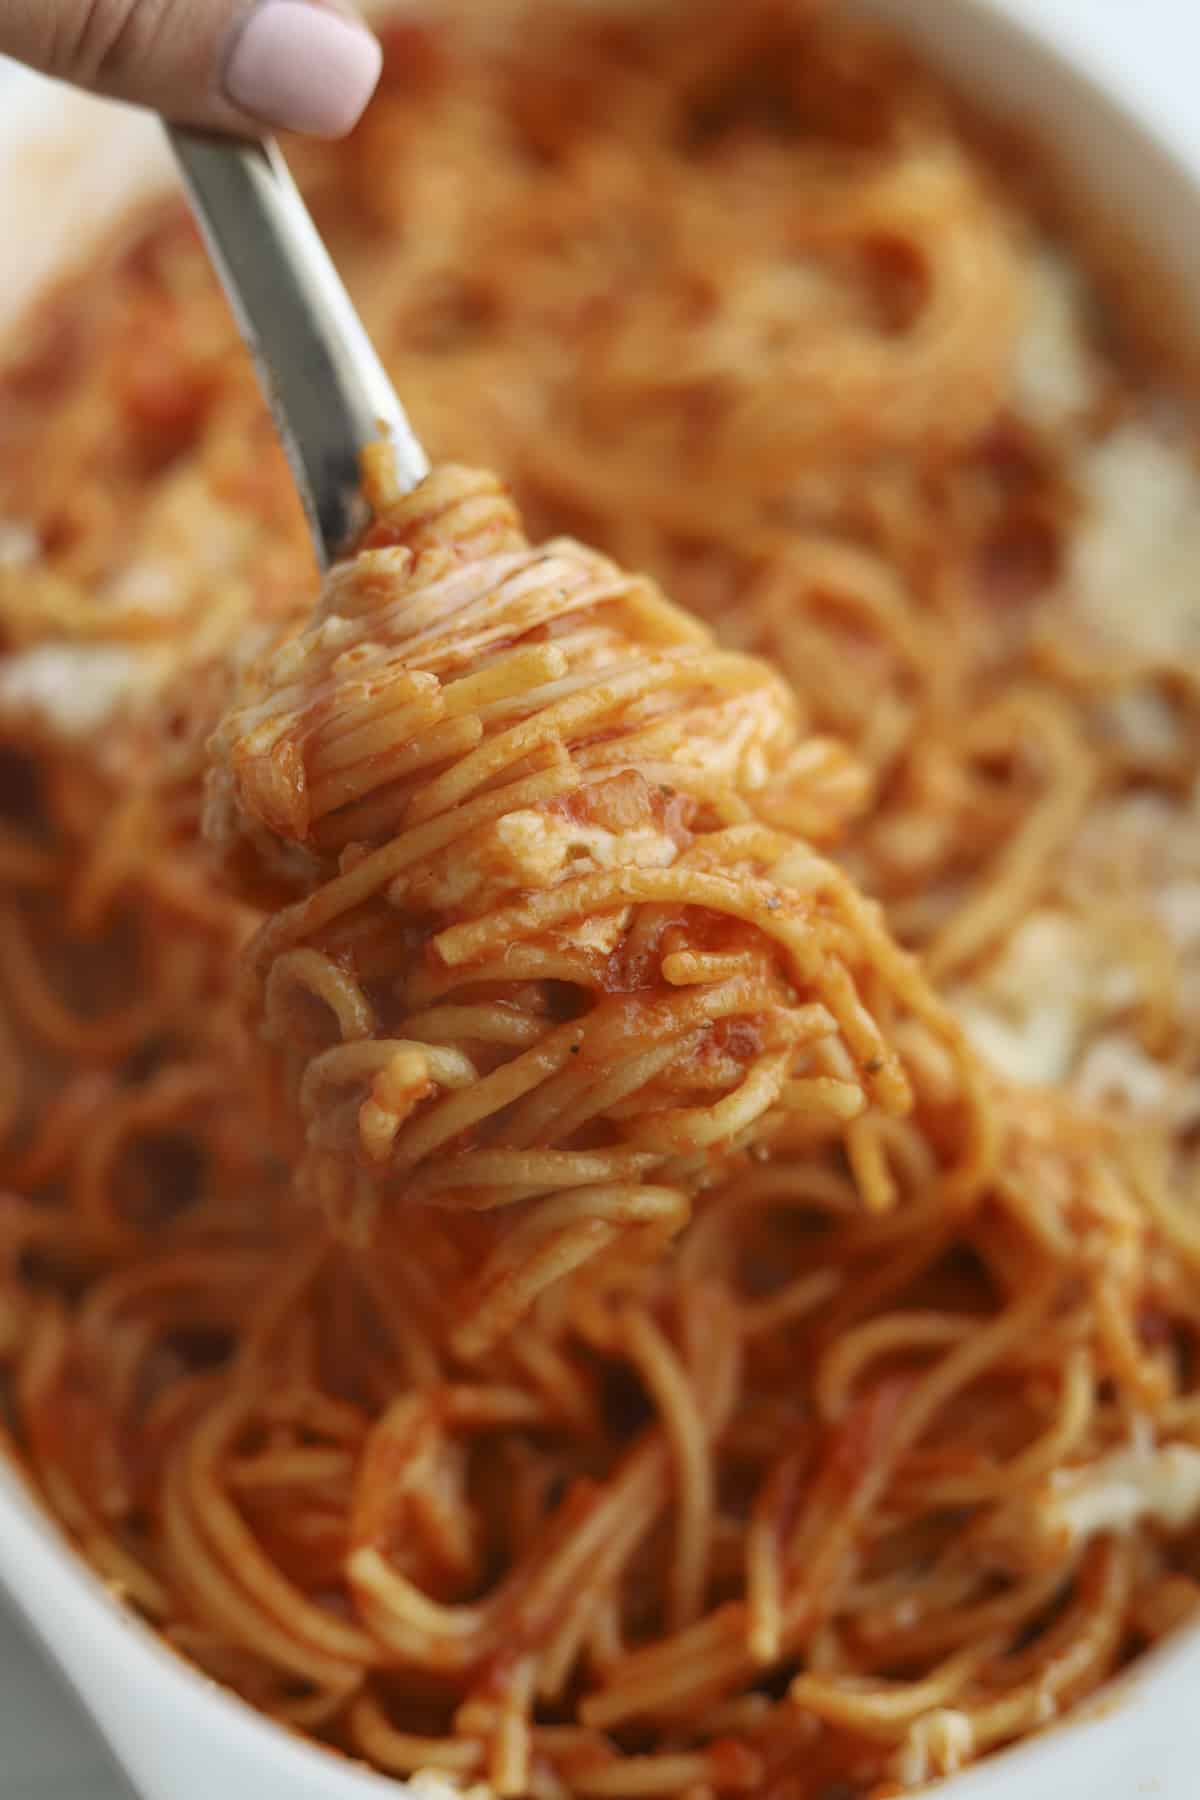 large spoon full of spaghetti in a baking dish